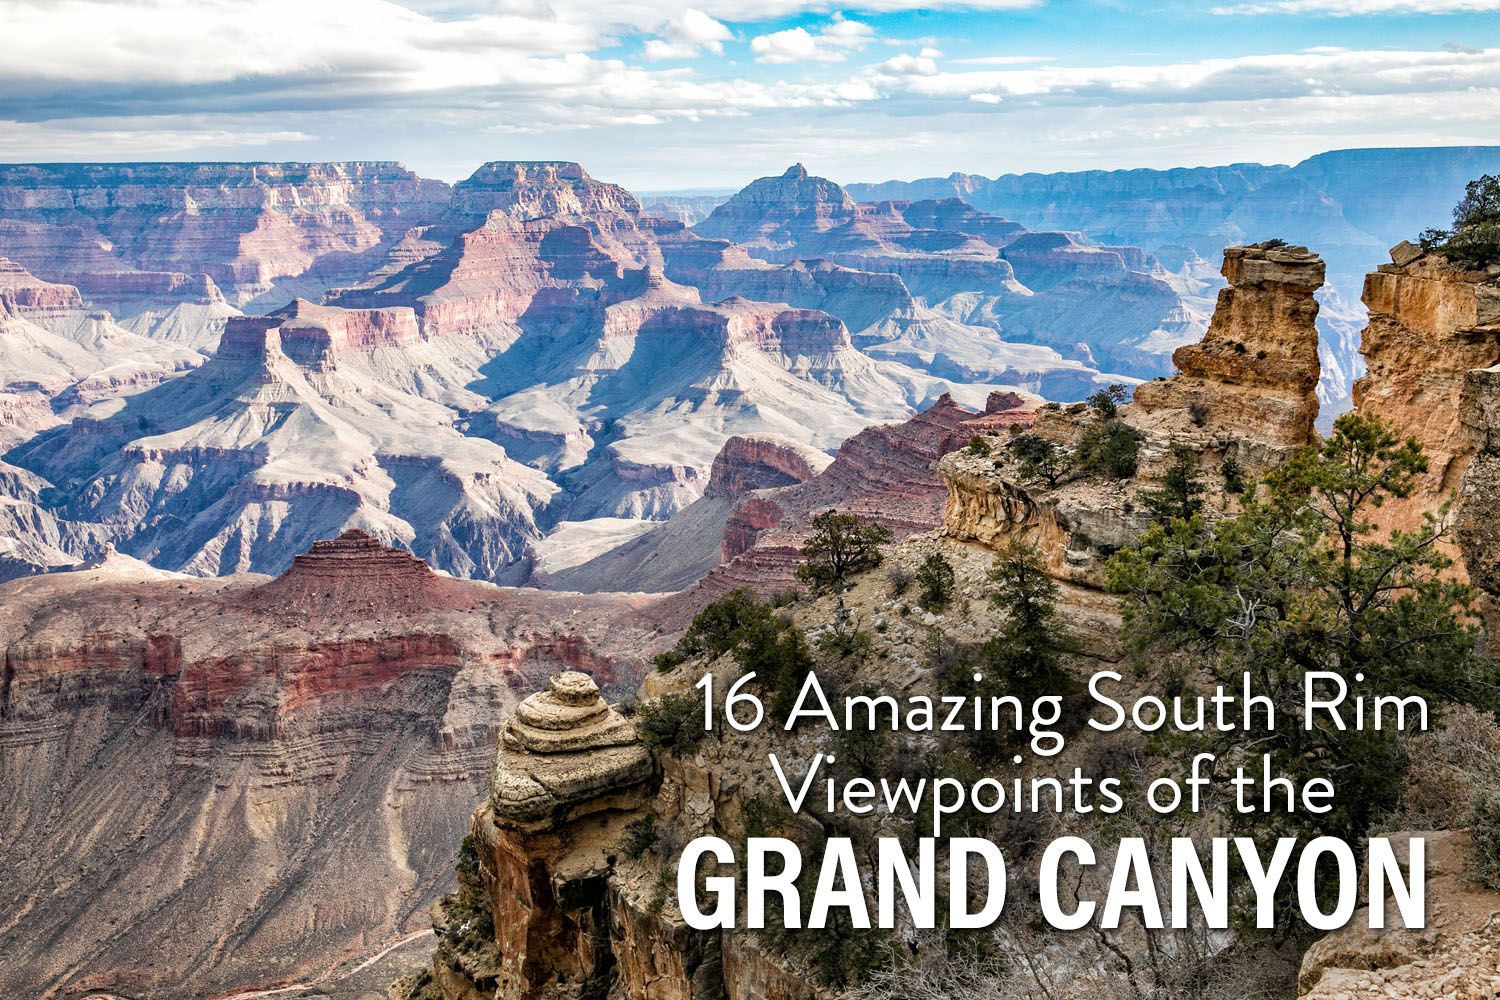 Grand Canyon South Rim Viewpoints